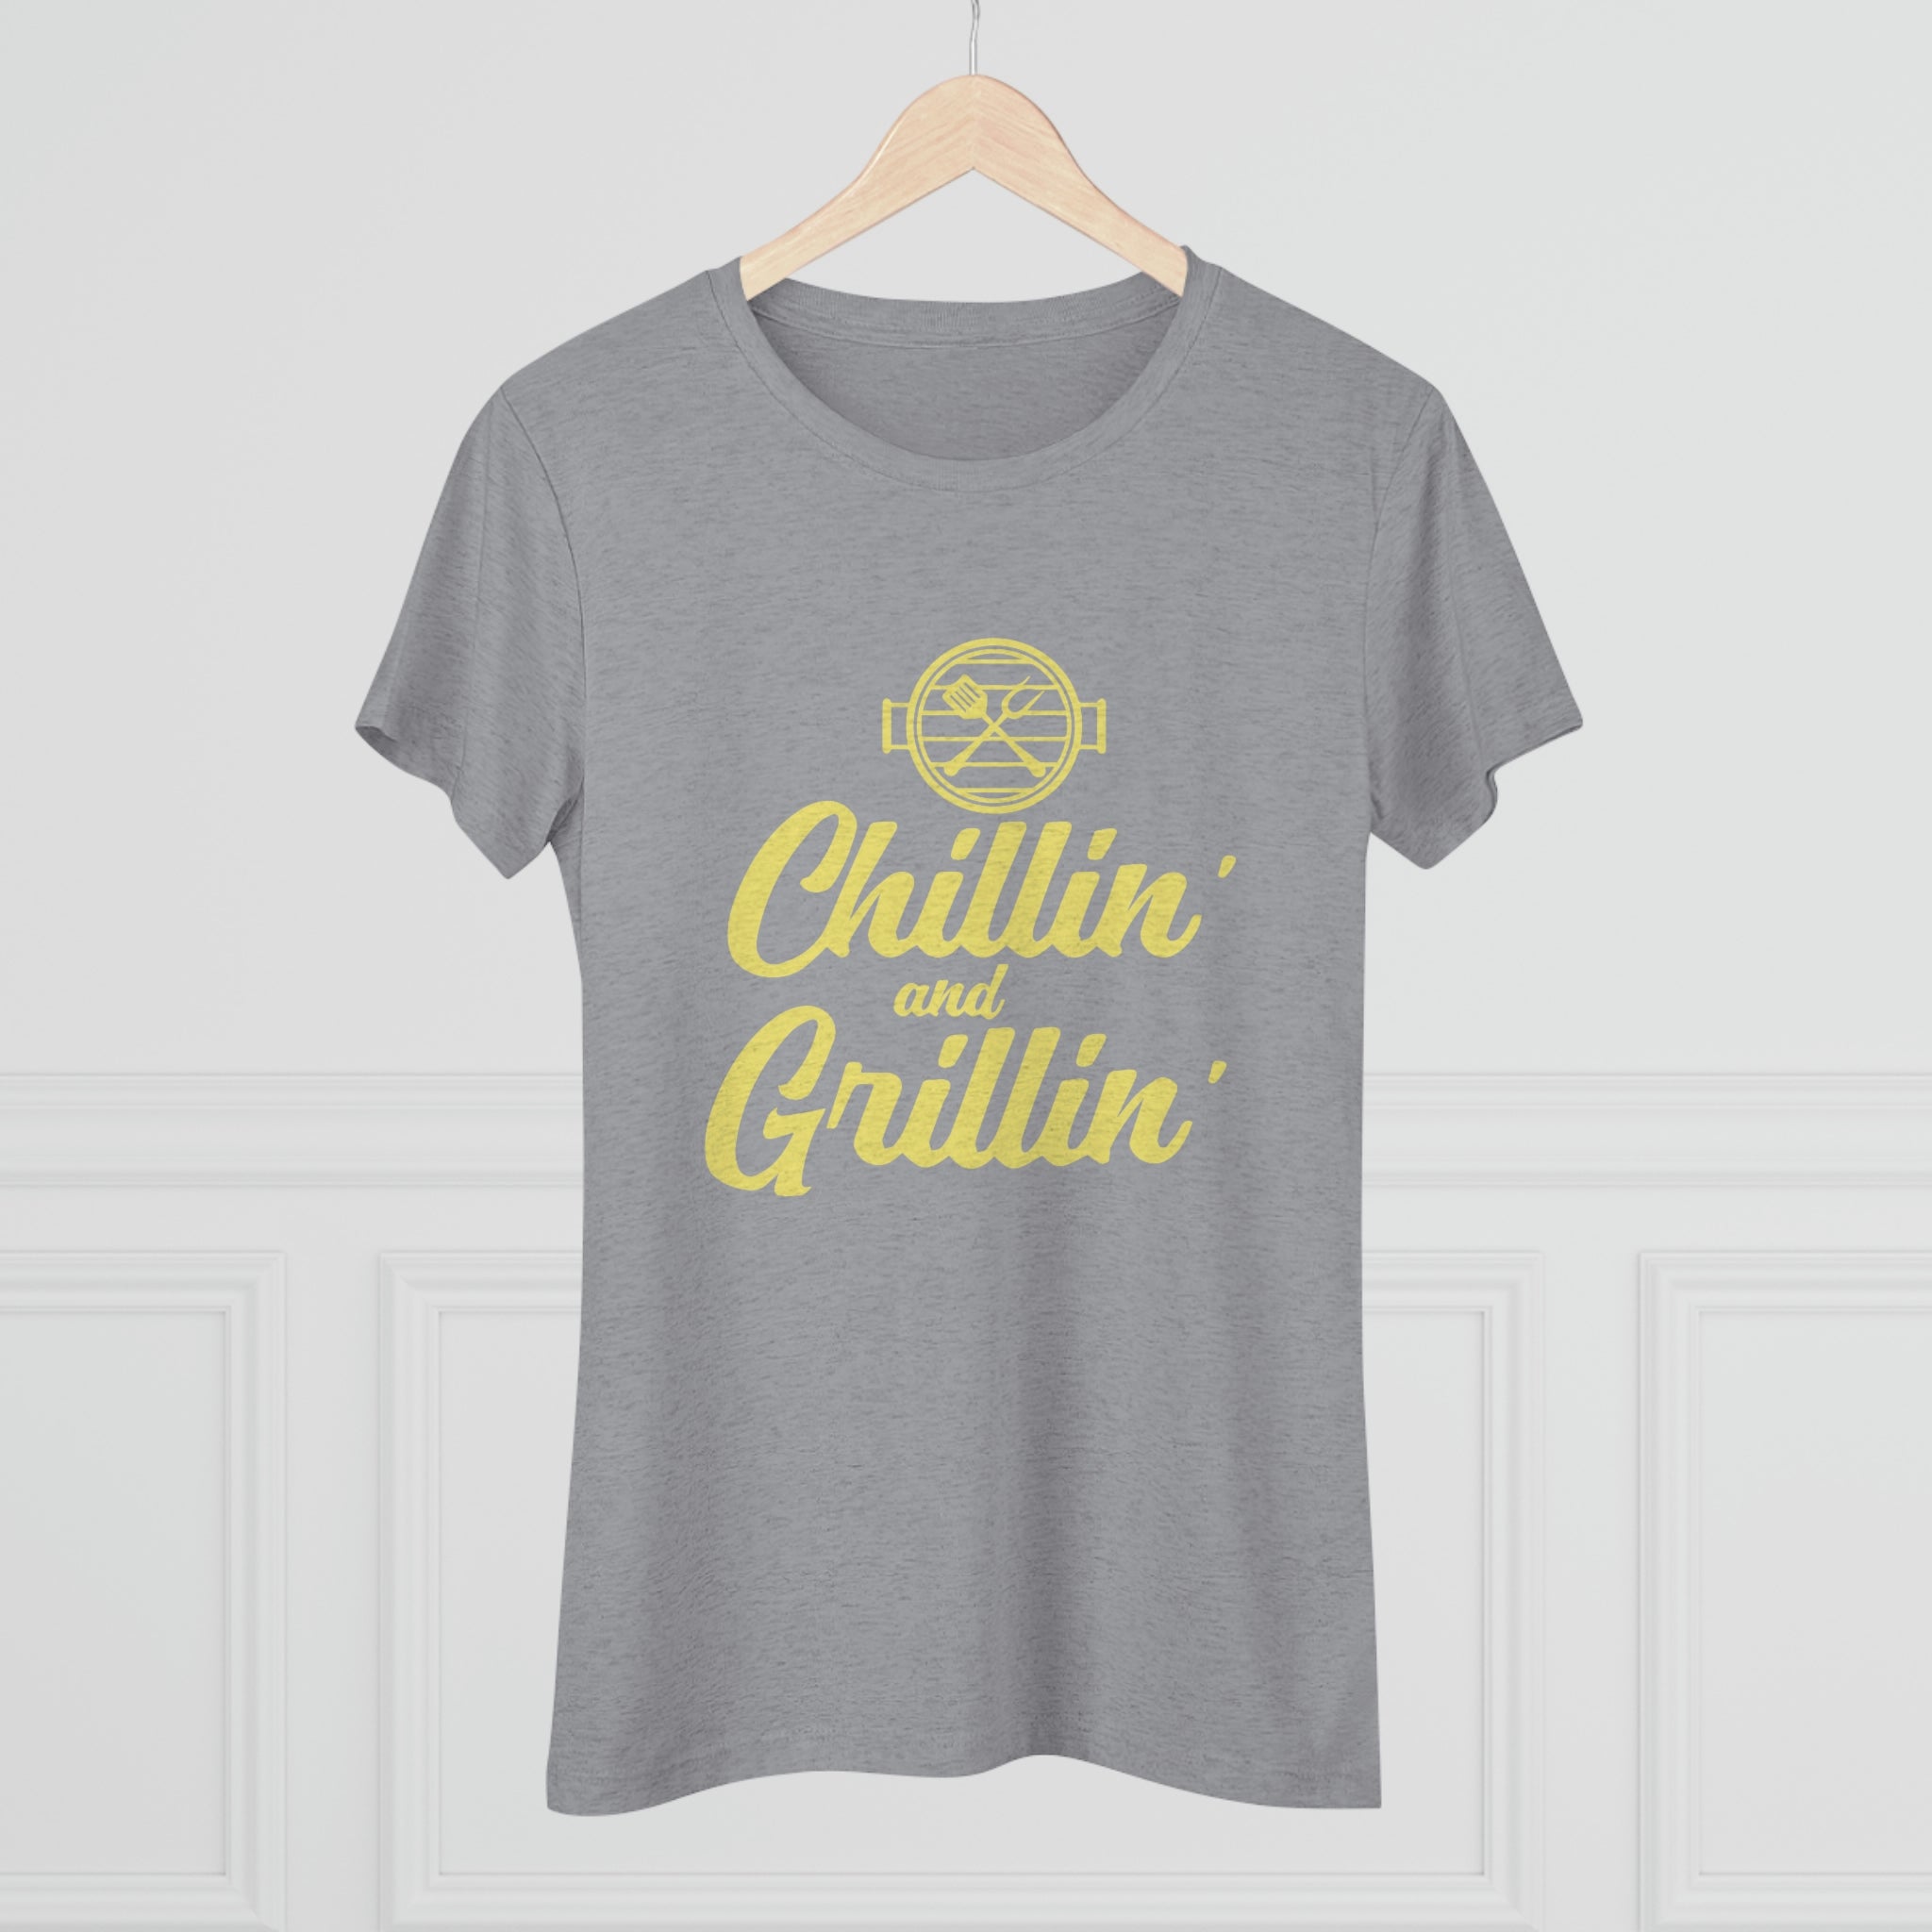 Chillin' & Grillin' women's shirt